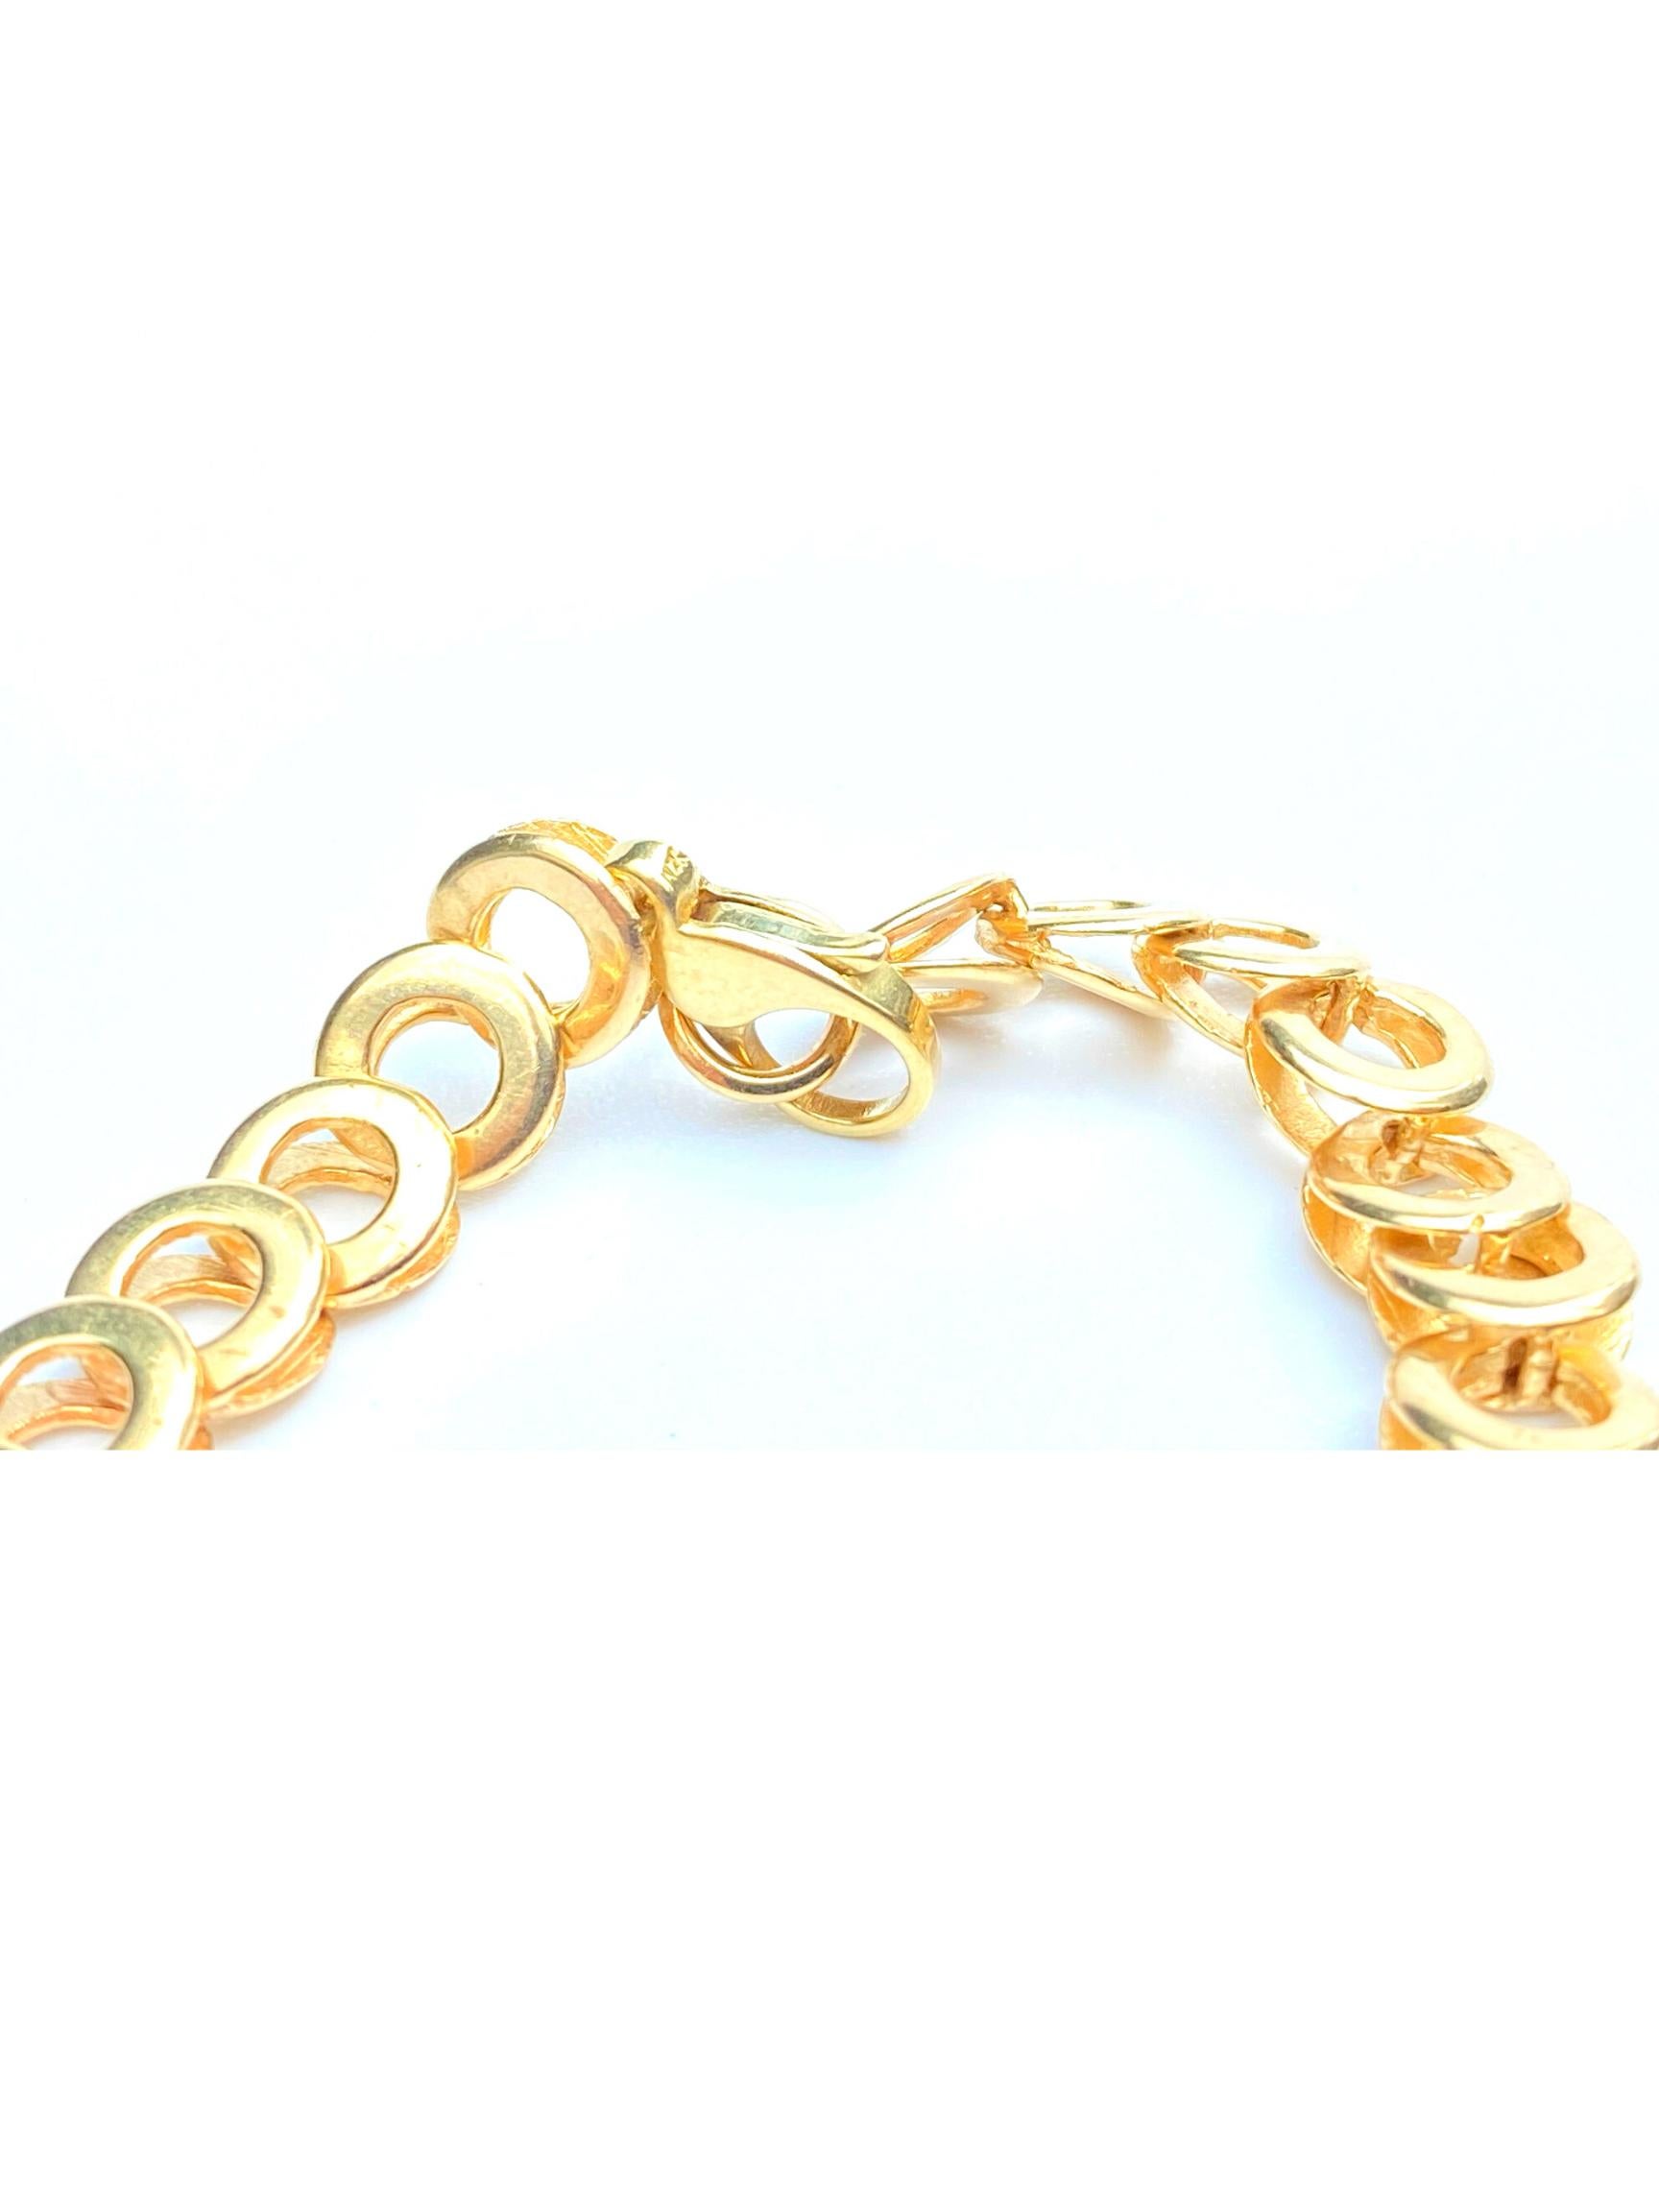 4.00 Carat Round-Brilliant Cut Diamond Chain 14k Yellow Gold Necklace In Excellent Condition For Sale In Miami, FL